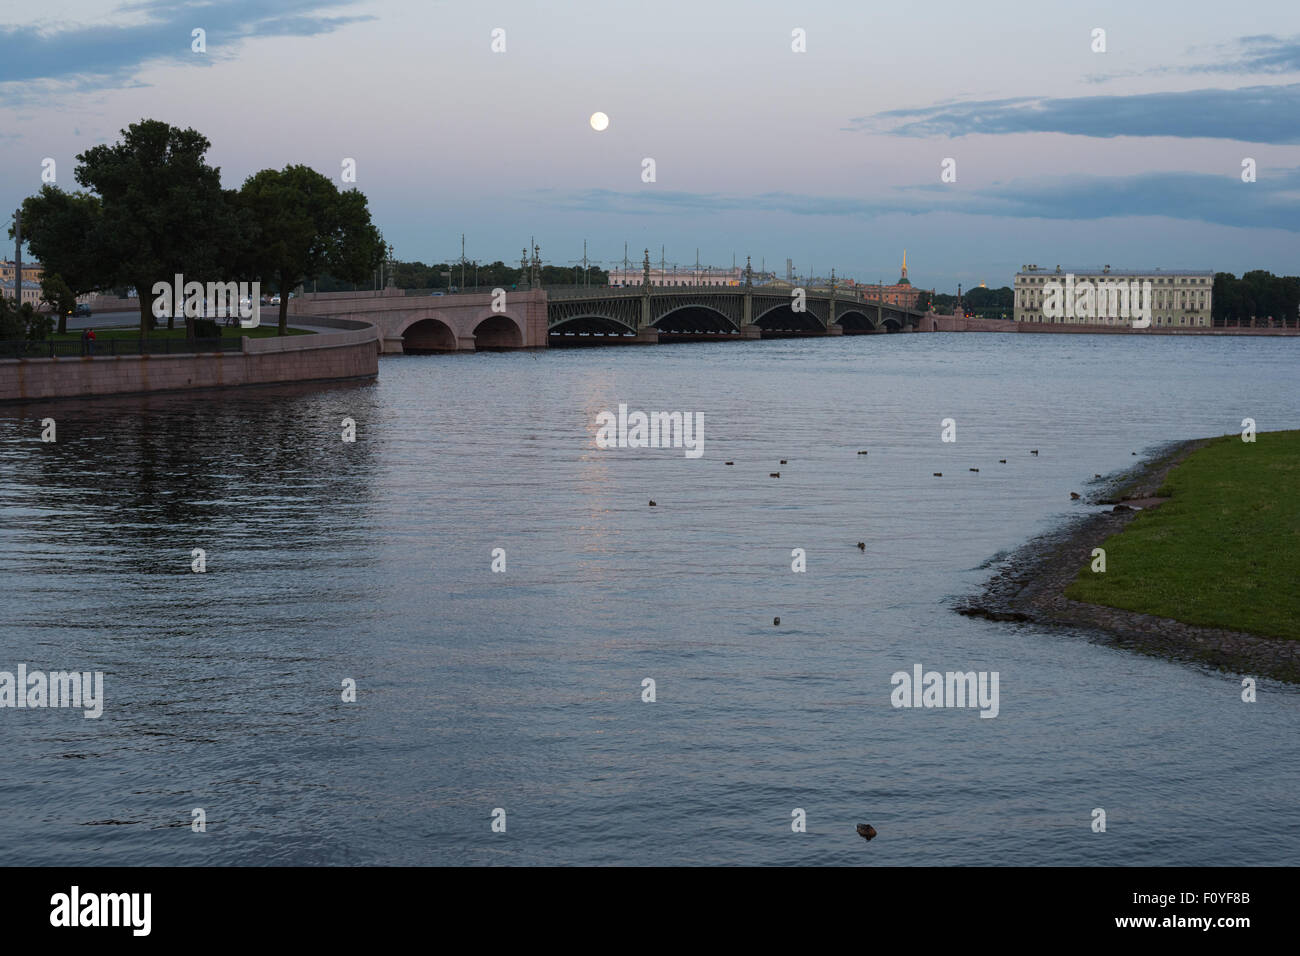 White nights in Saint Petersburg. Trinity bridge (Troitskiy Most) across the Neva river in July Stock Photo